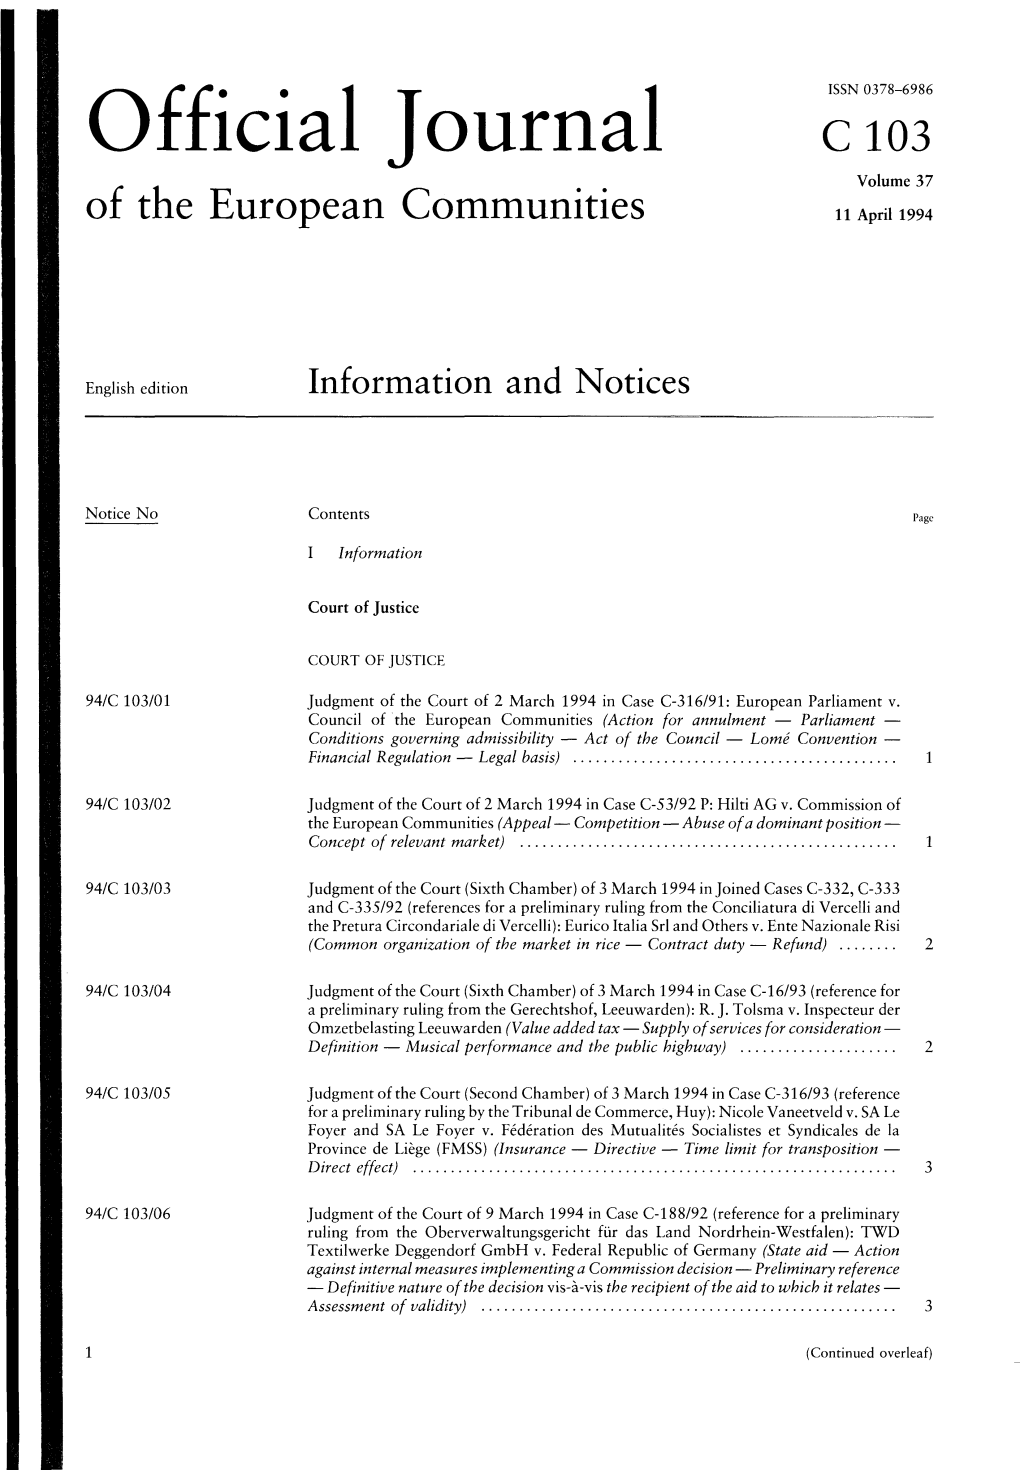 Official Journal C 103 Volume 37 of the European Communities 11 April 1994